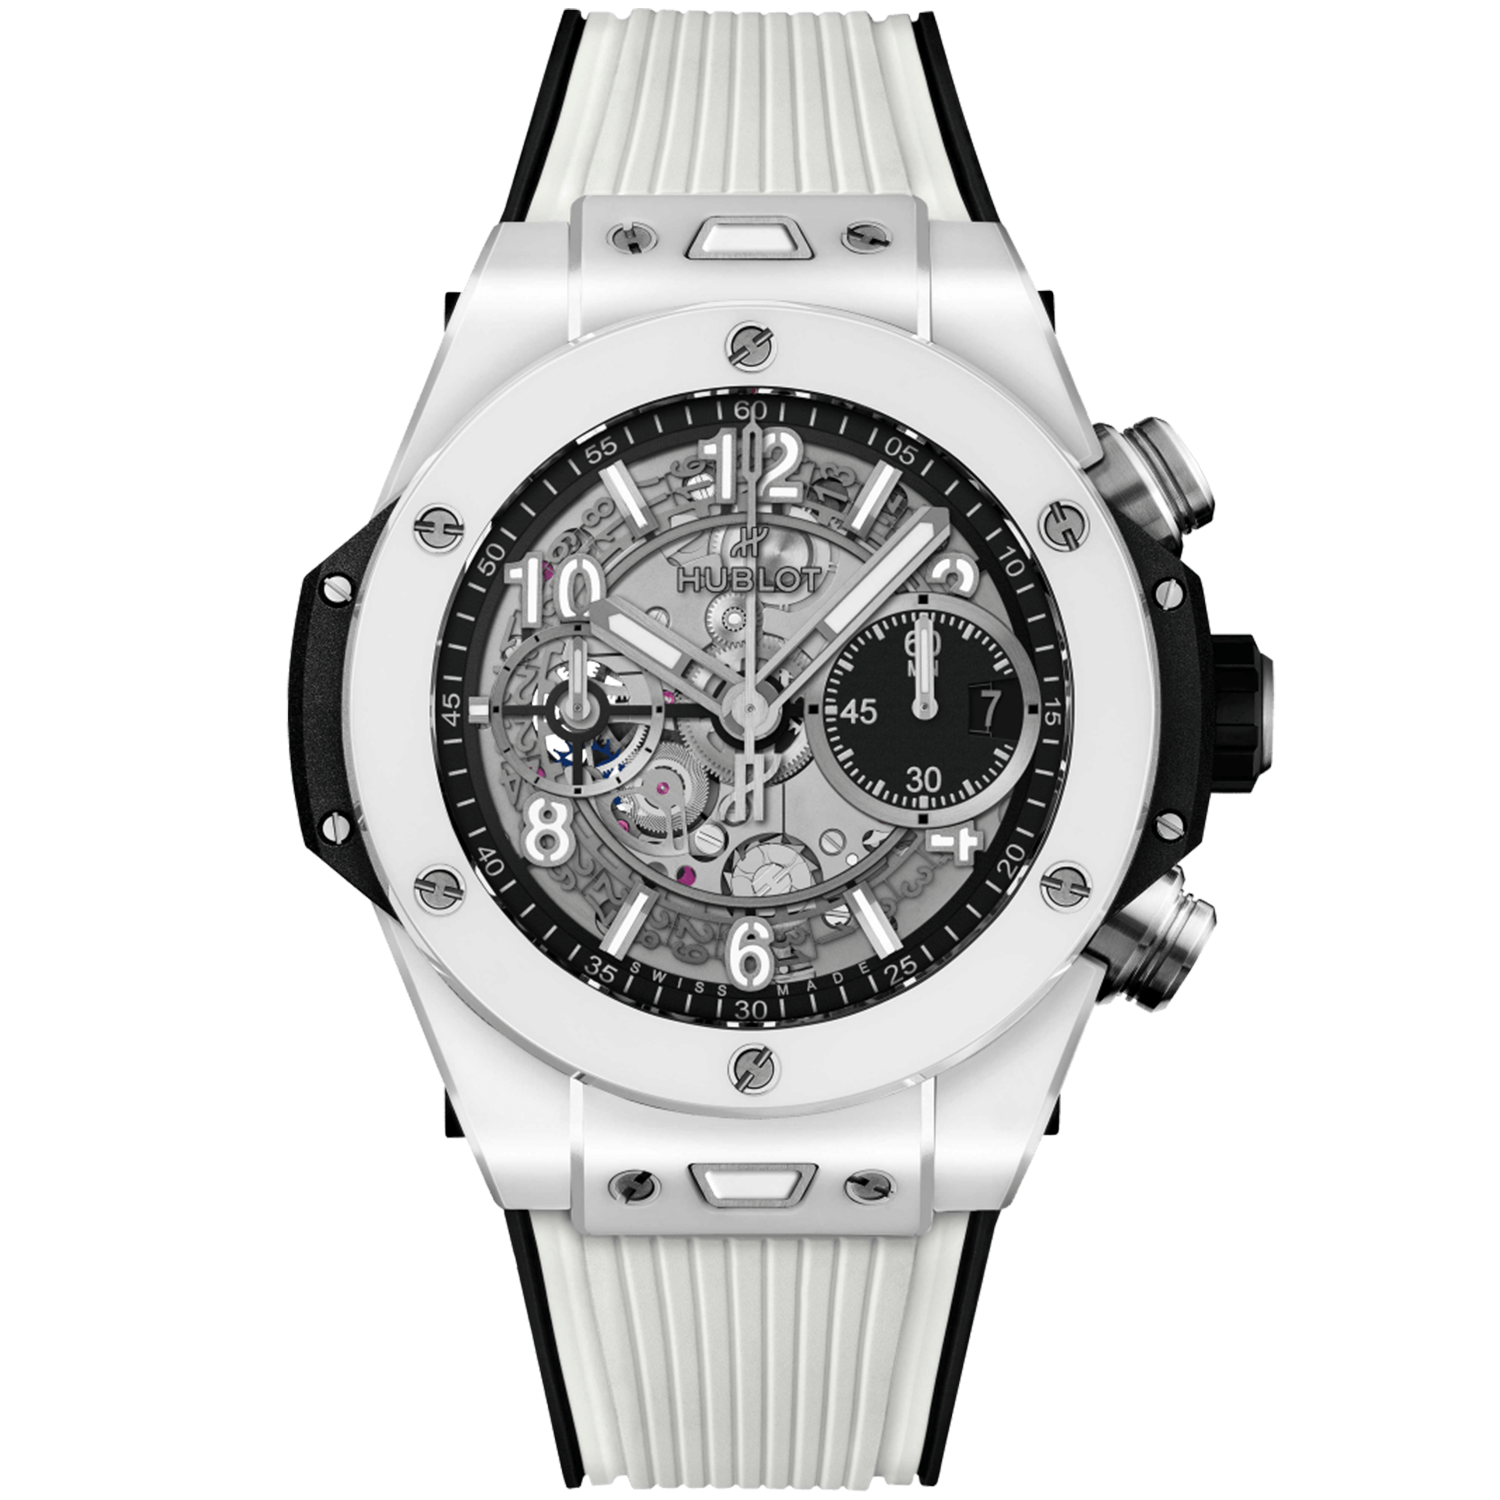 Big Bang Unico White Magic 42mm Titanium Automatic Chronograph Watch